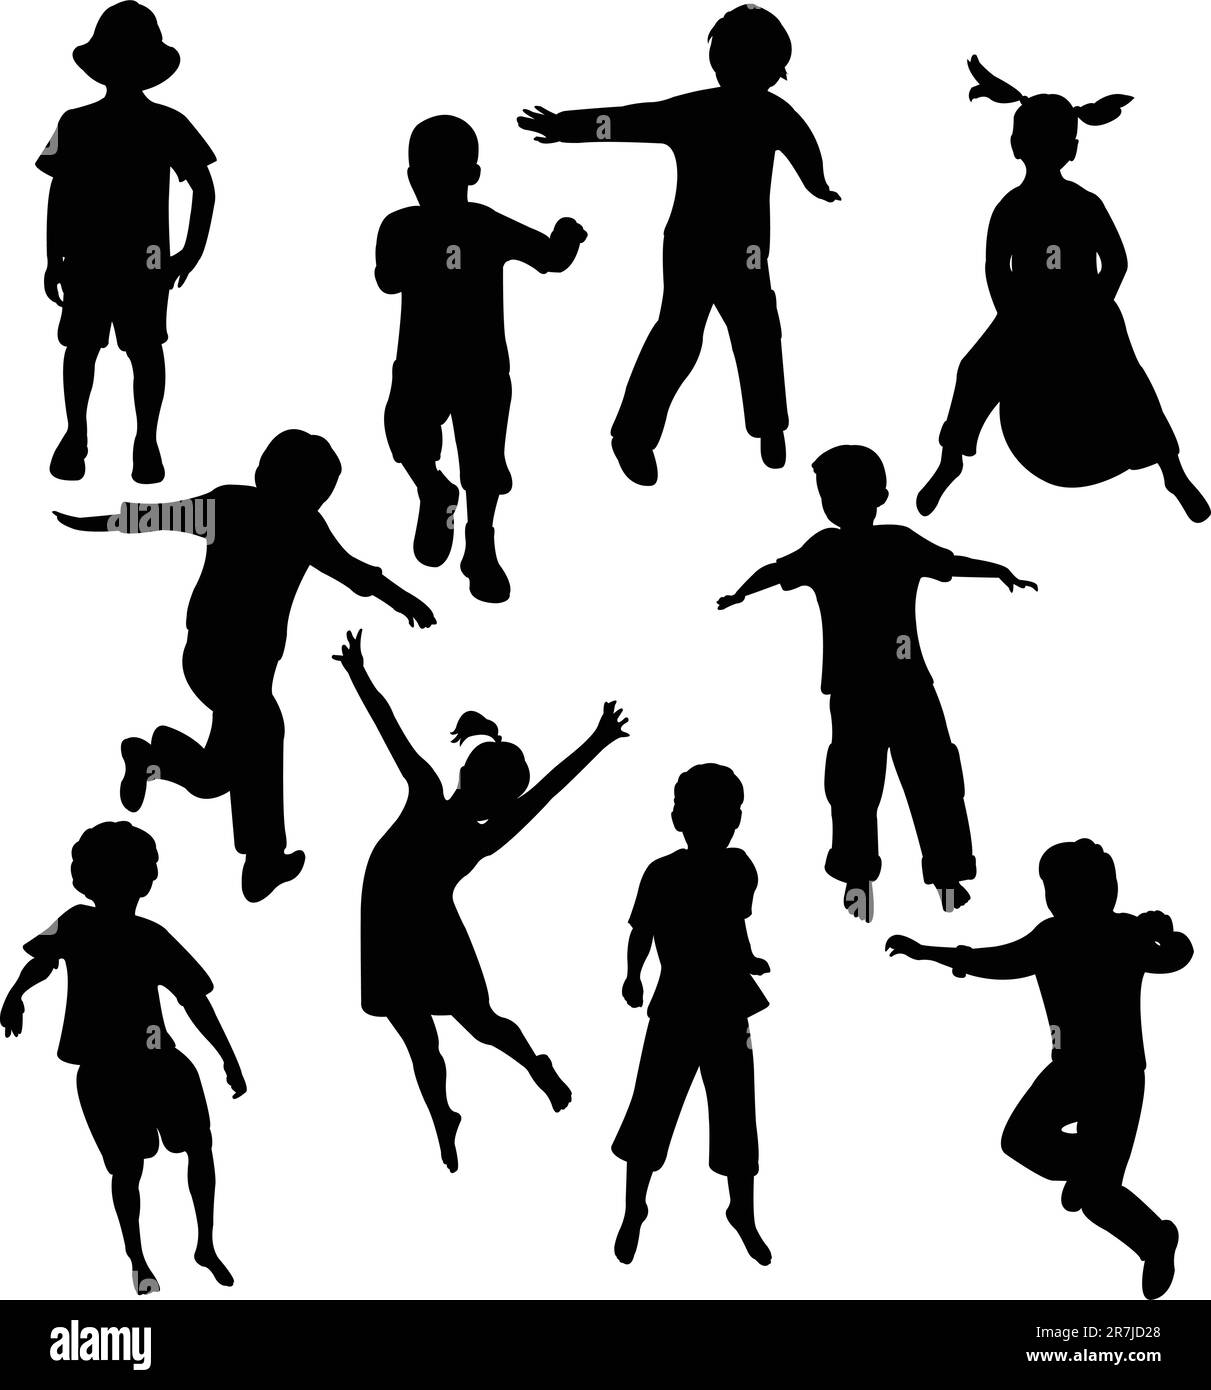 children silhouettes - vector illustration Stock Vector